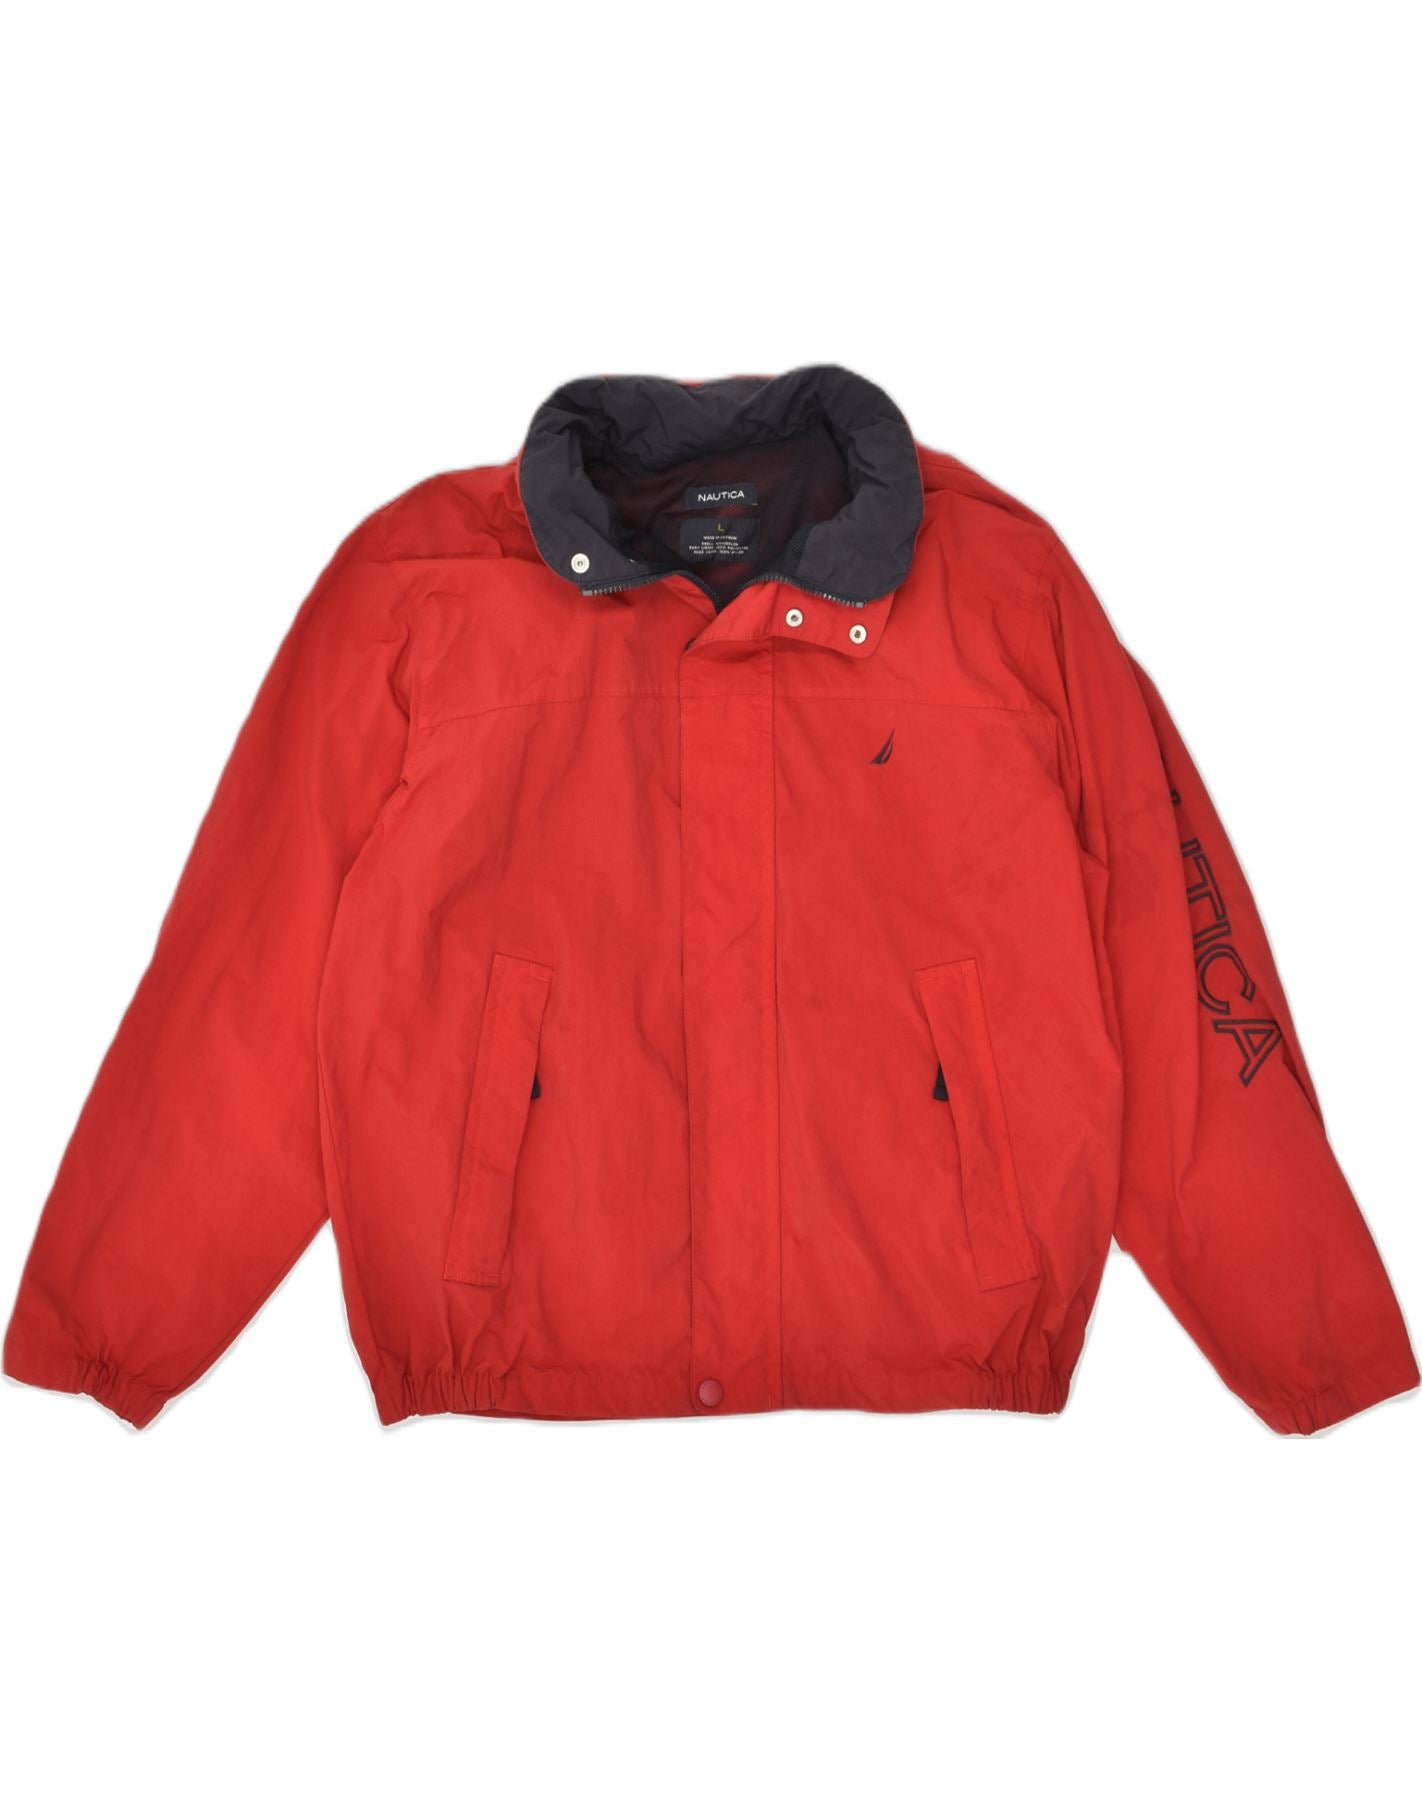 NAUTICA Mens Hooded Bomber Jacket UK 40 Large Red Nylon, Vintage &  Second-Hand Clothing Online